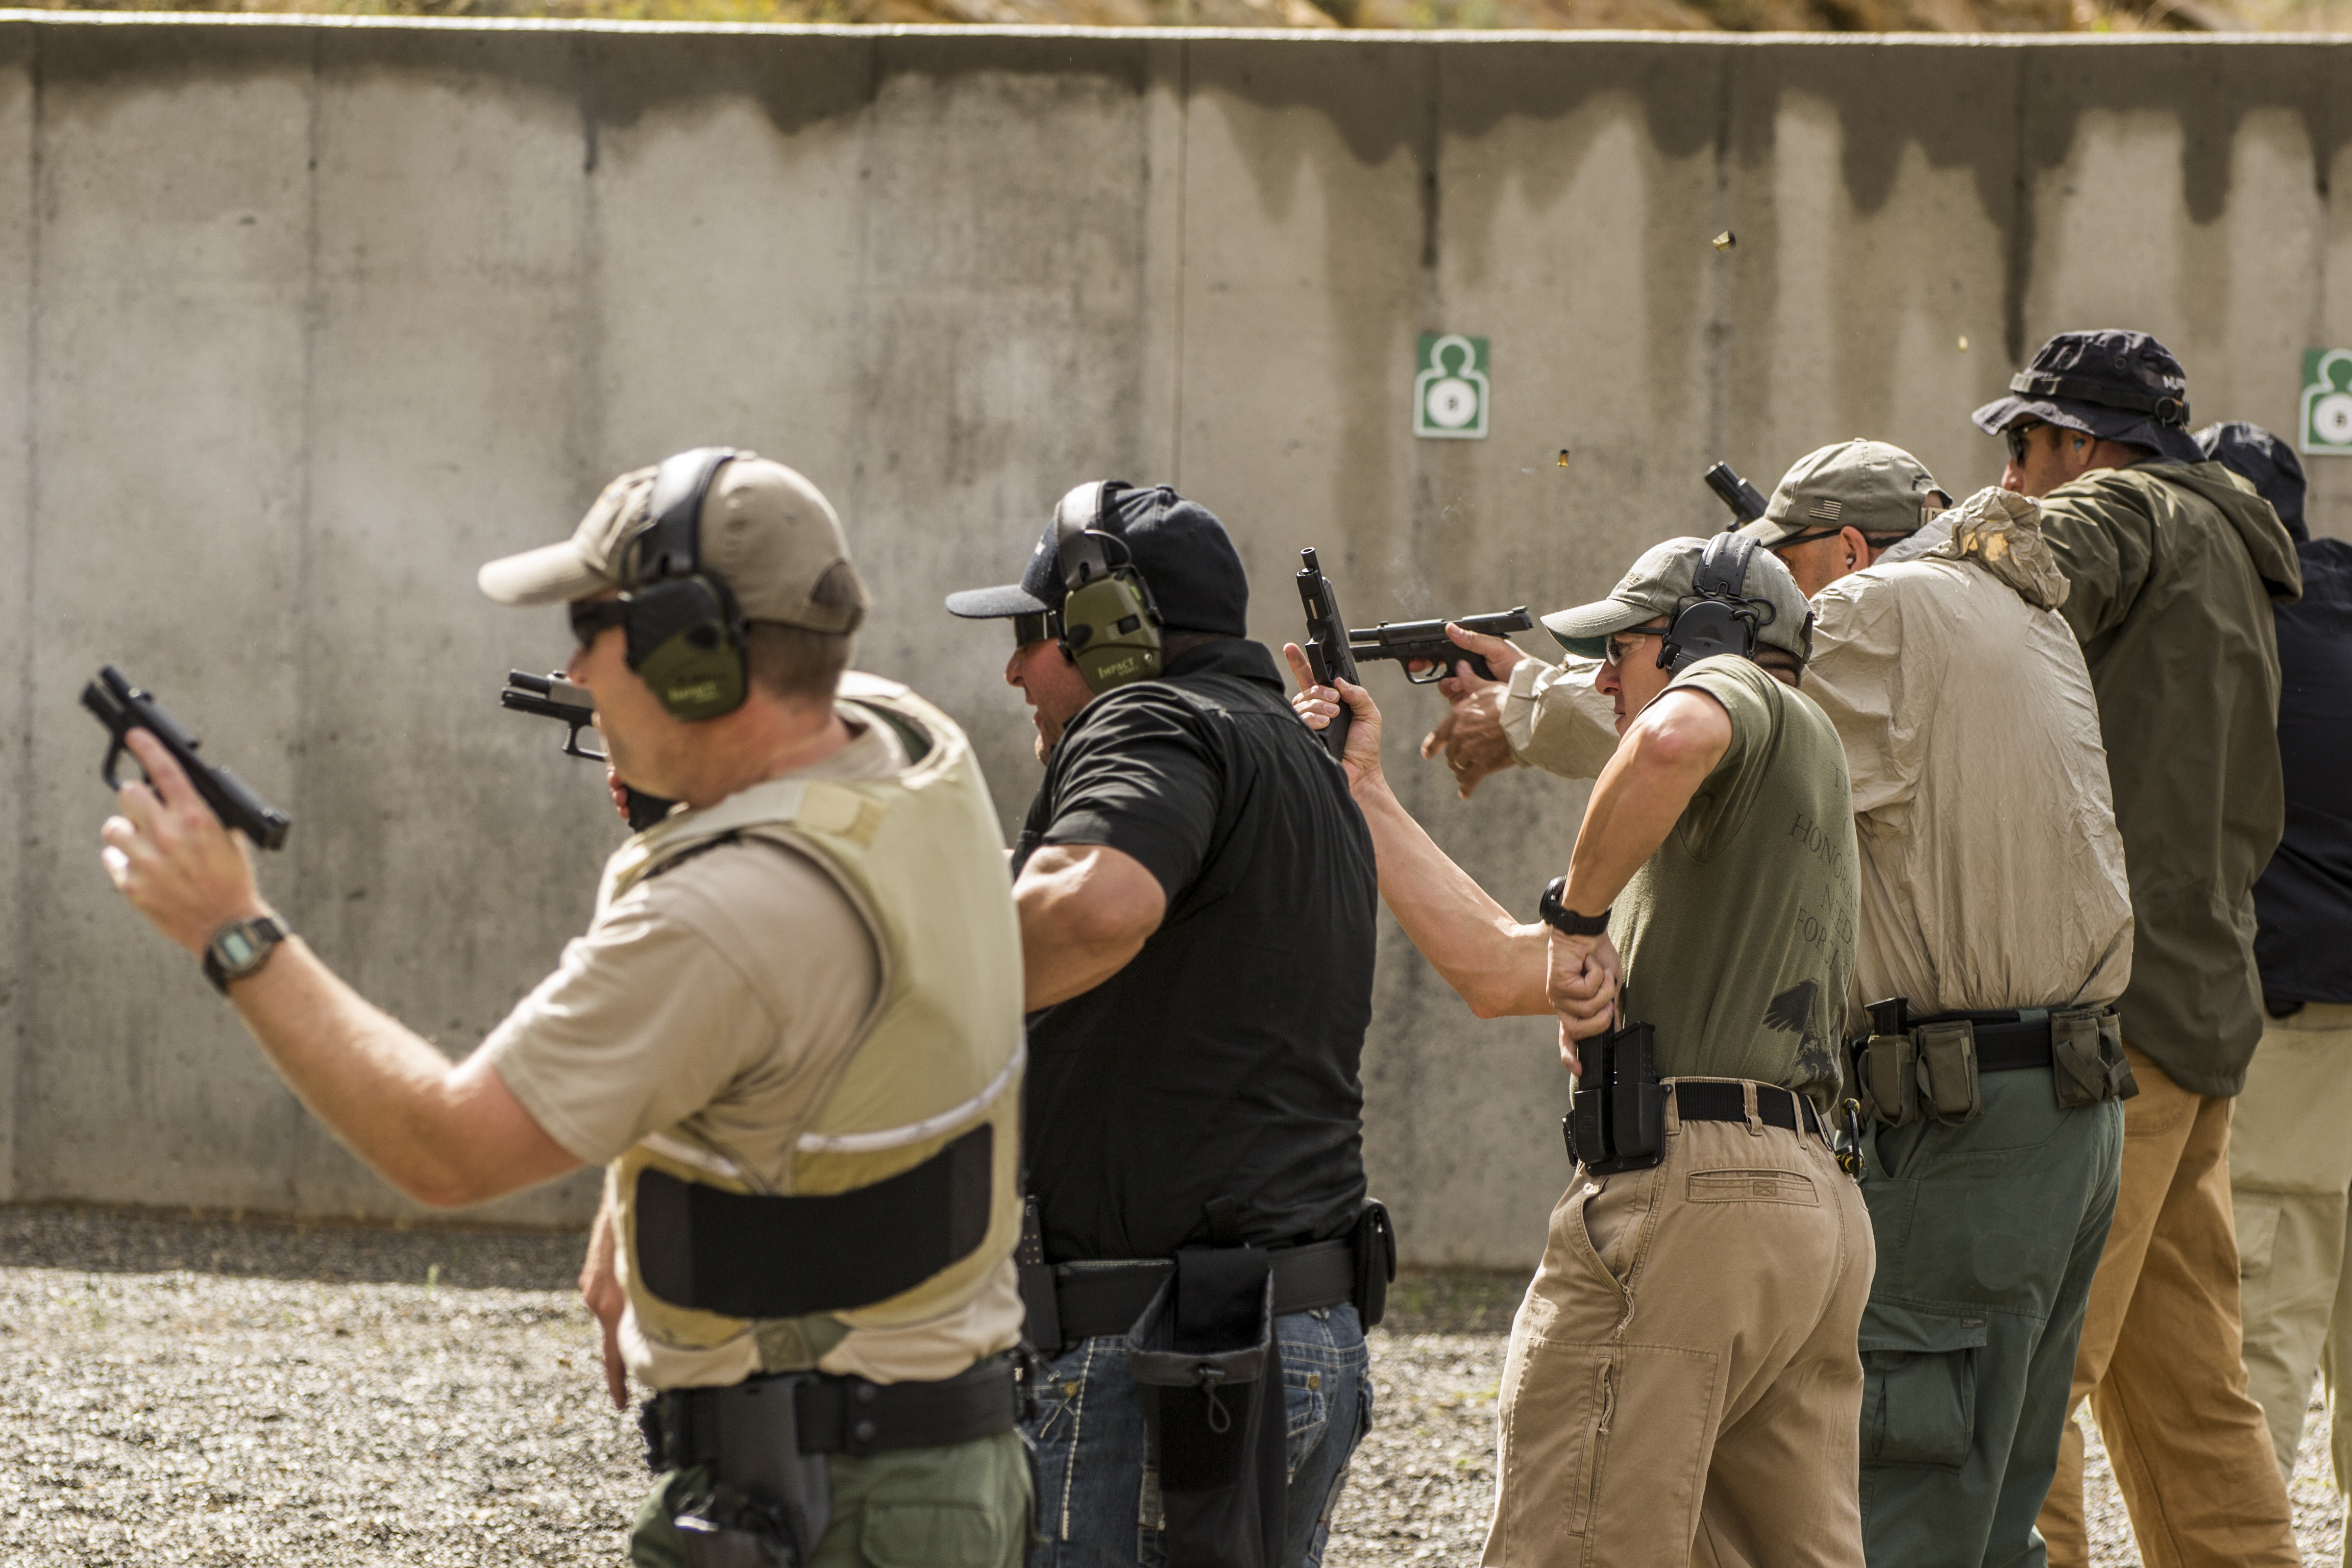 law enforcement training camp | Action Target